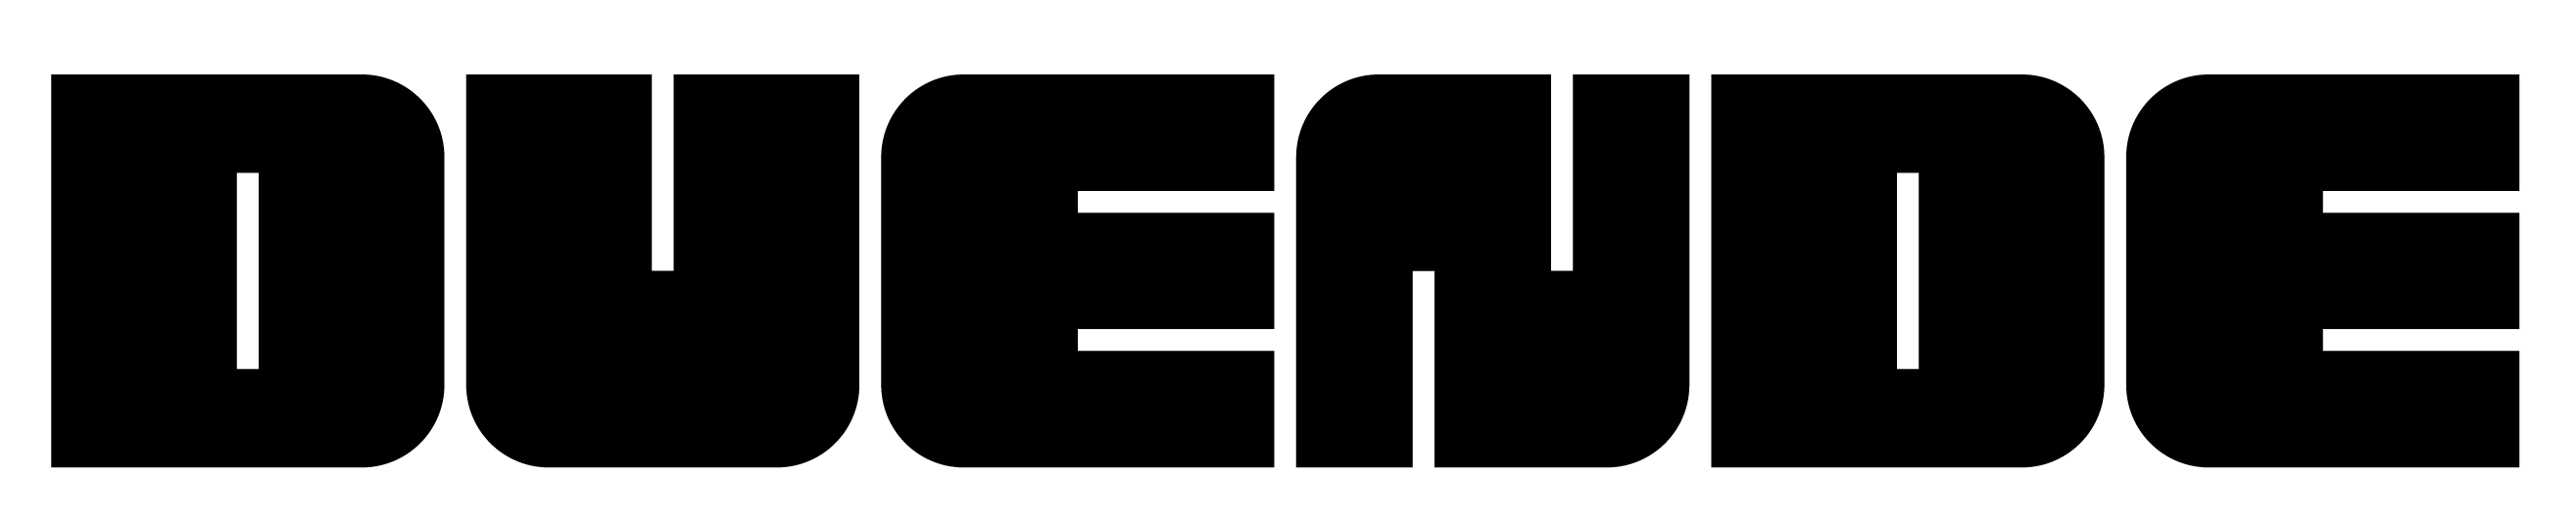 logo duende black